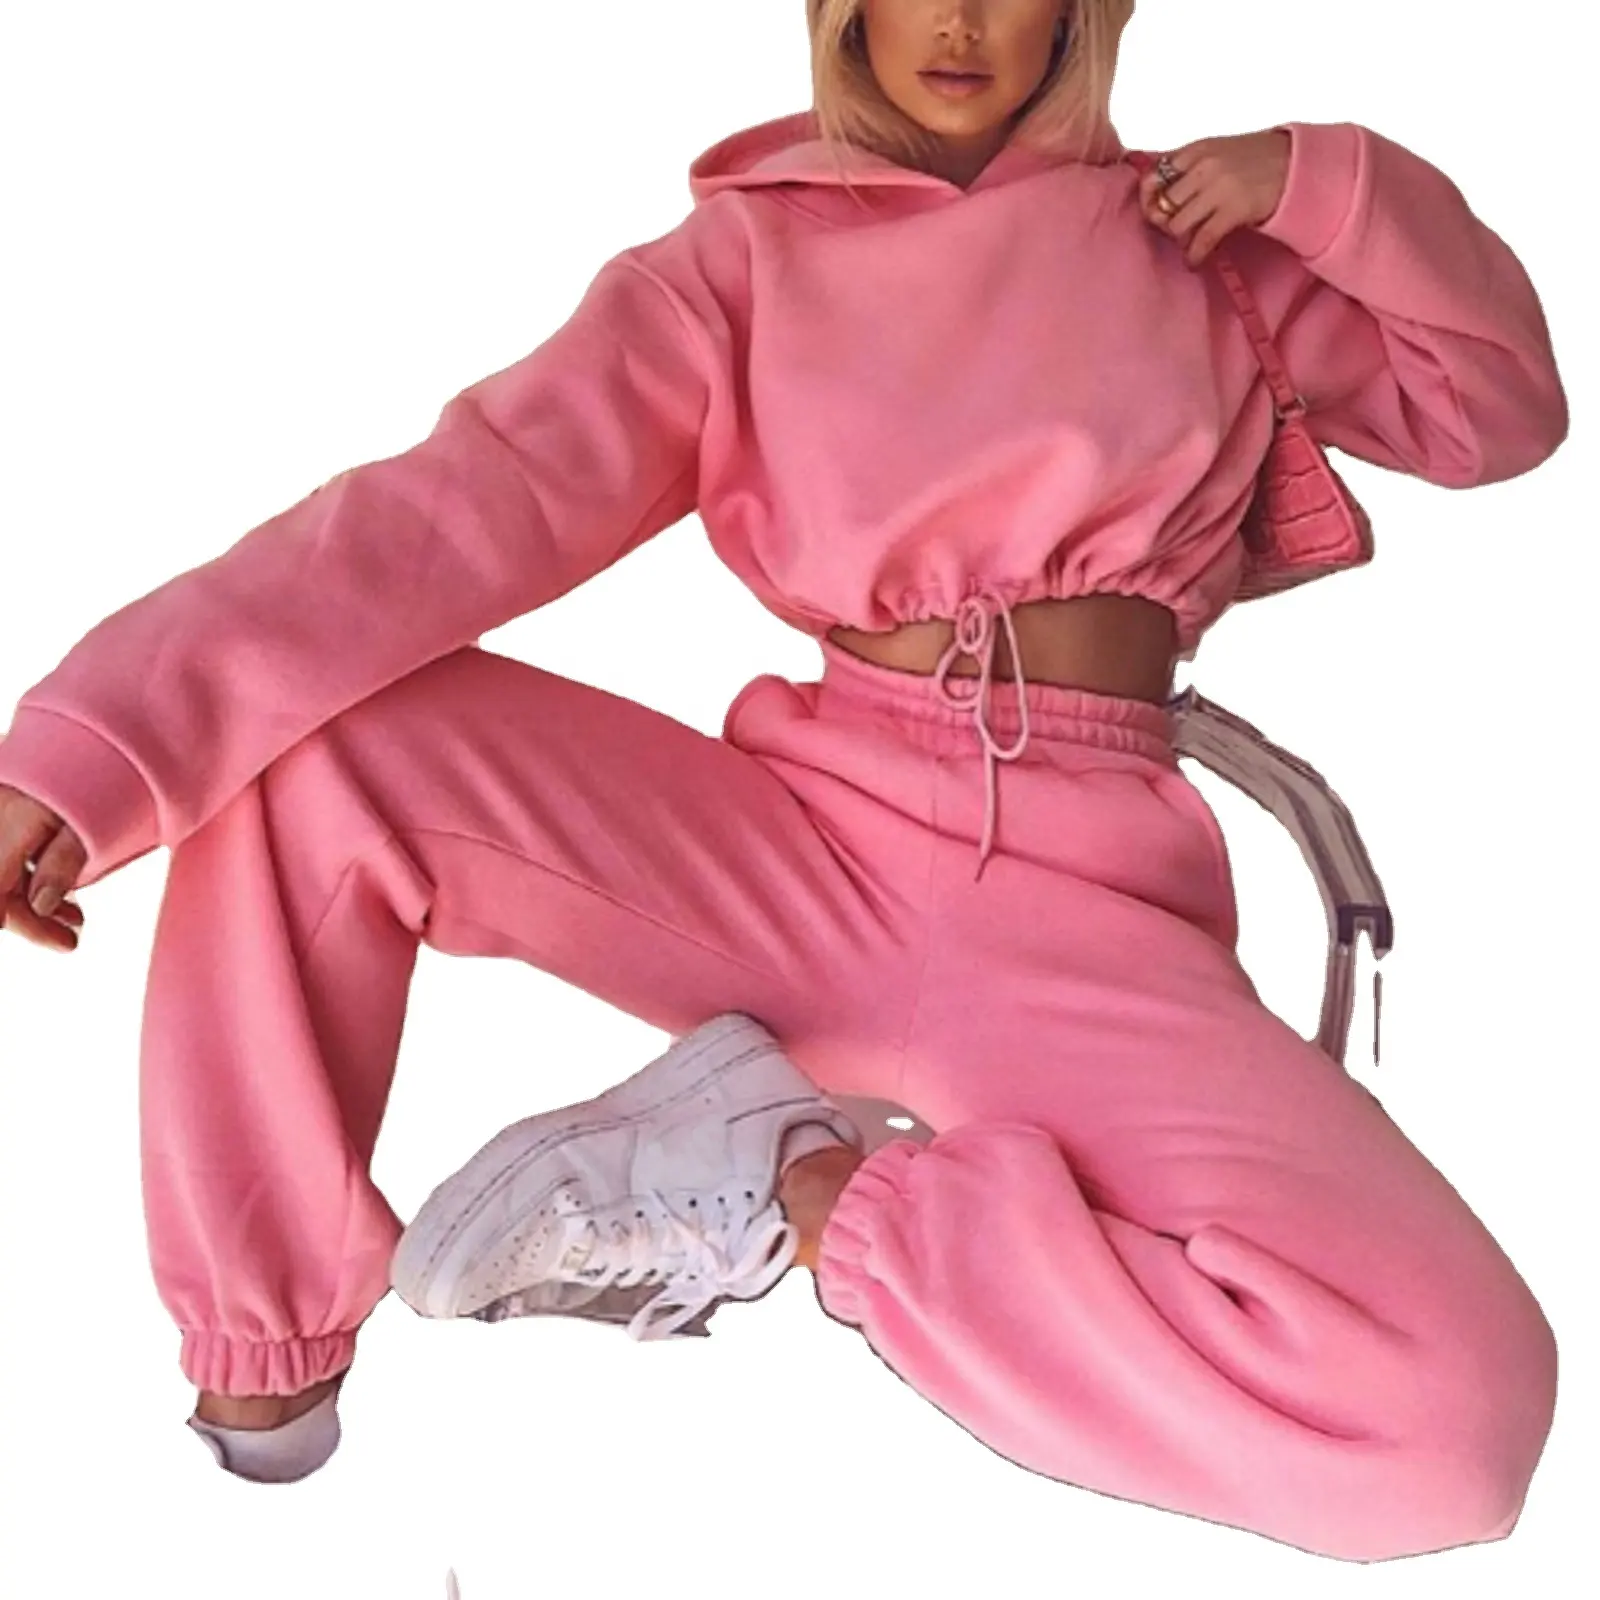 Tracksuits For Women's Hoodies Women Sweat Suits Pink Sweatshirt Girls Clothing Sets Sportswear Two Piece Jogger Crop Top